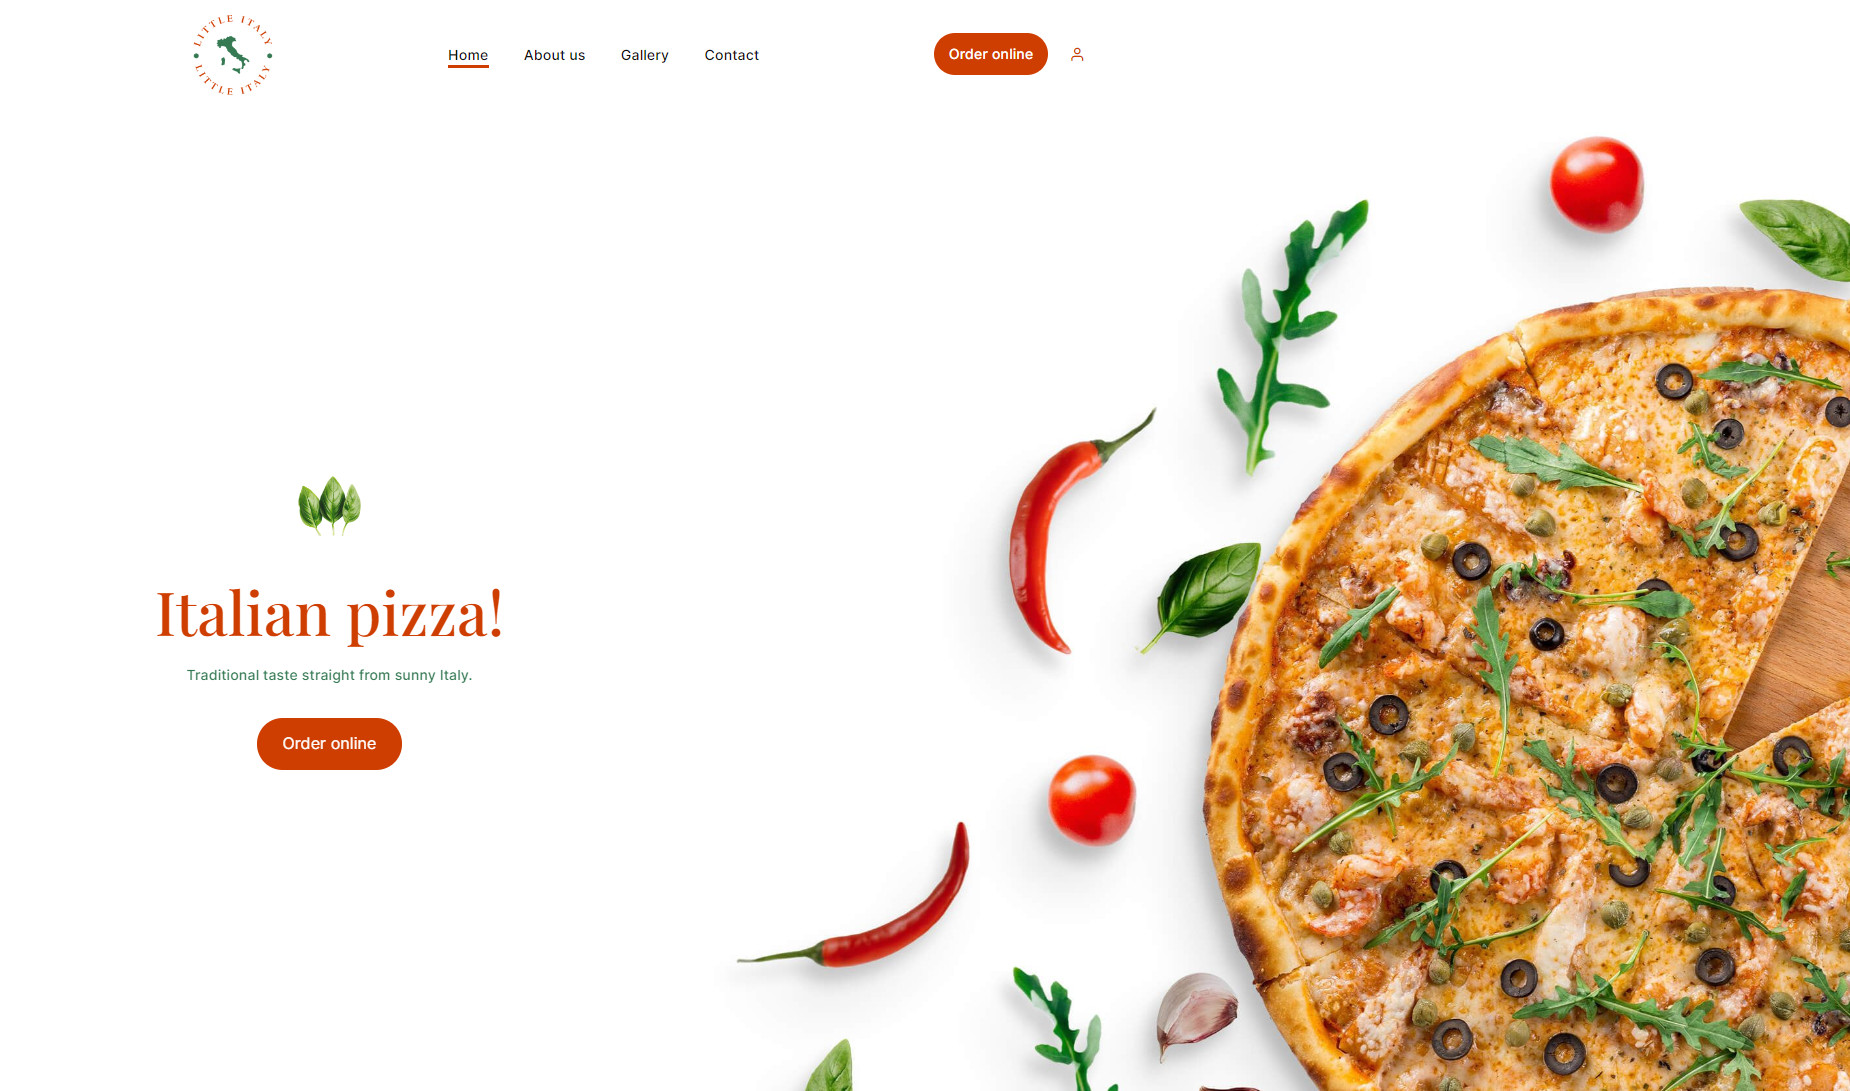 A website design for restaurants that serve pizza